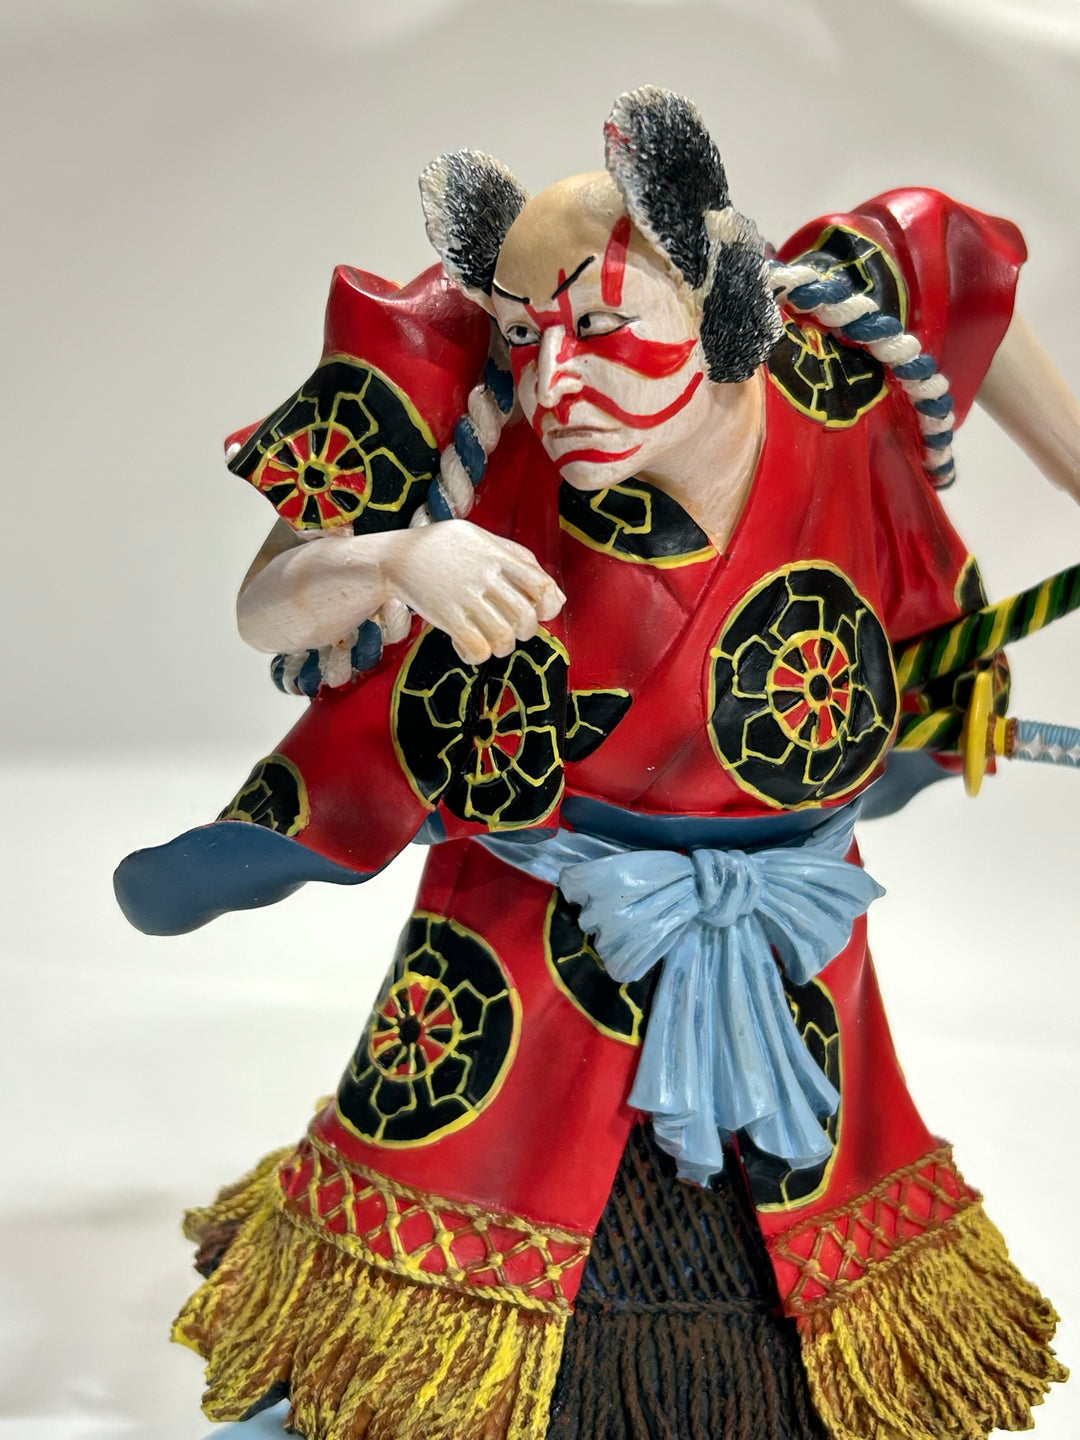 Japanese Kabuki Dancer Male Sculpture, Bando Kamezo